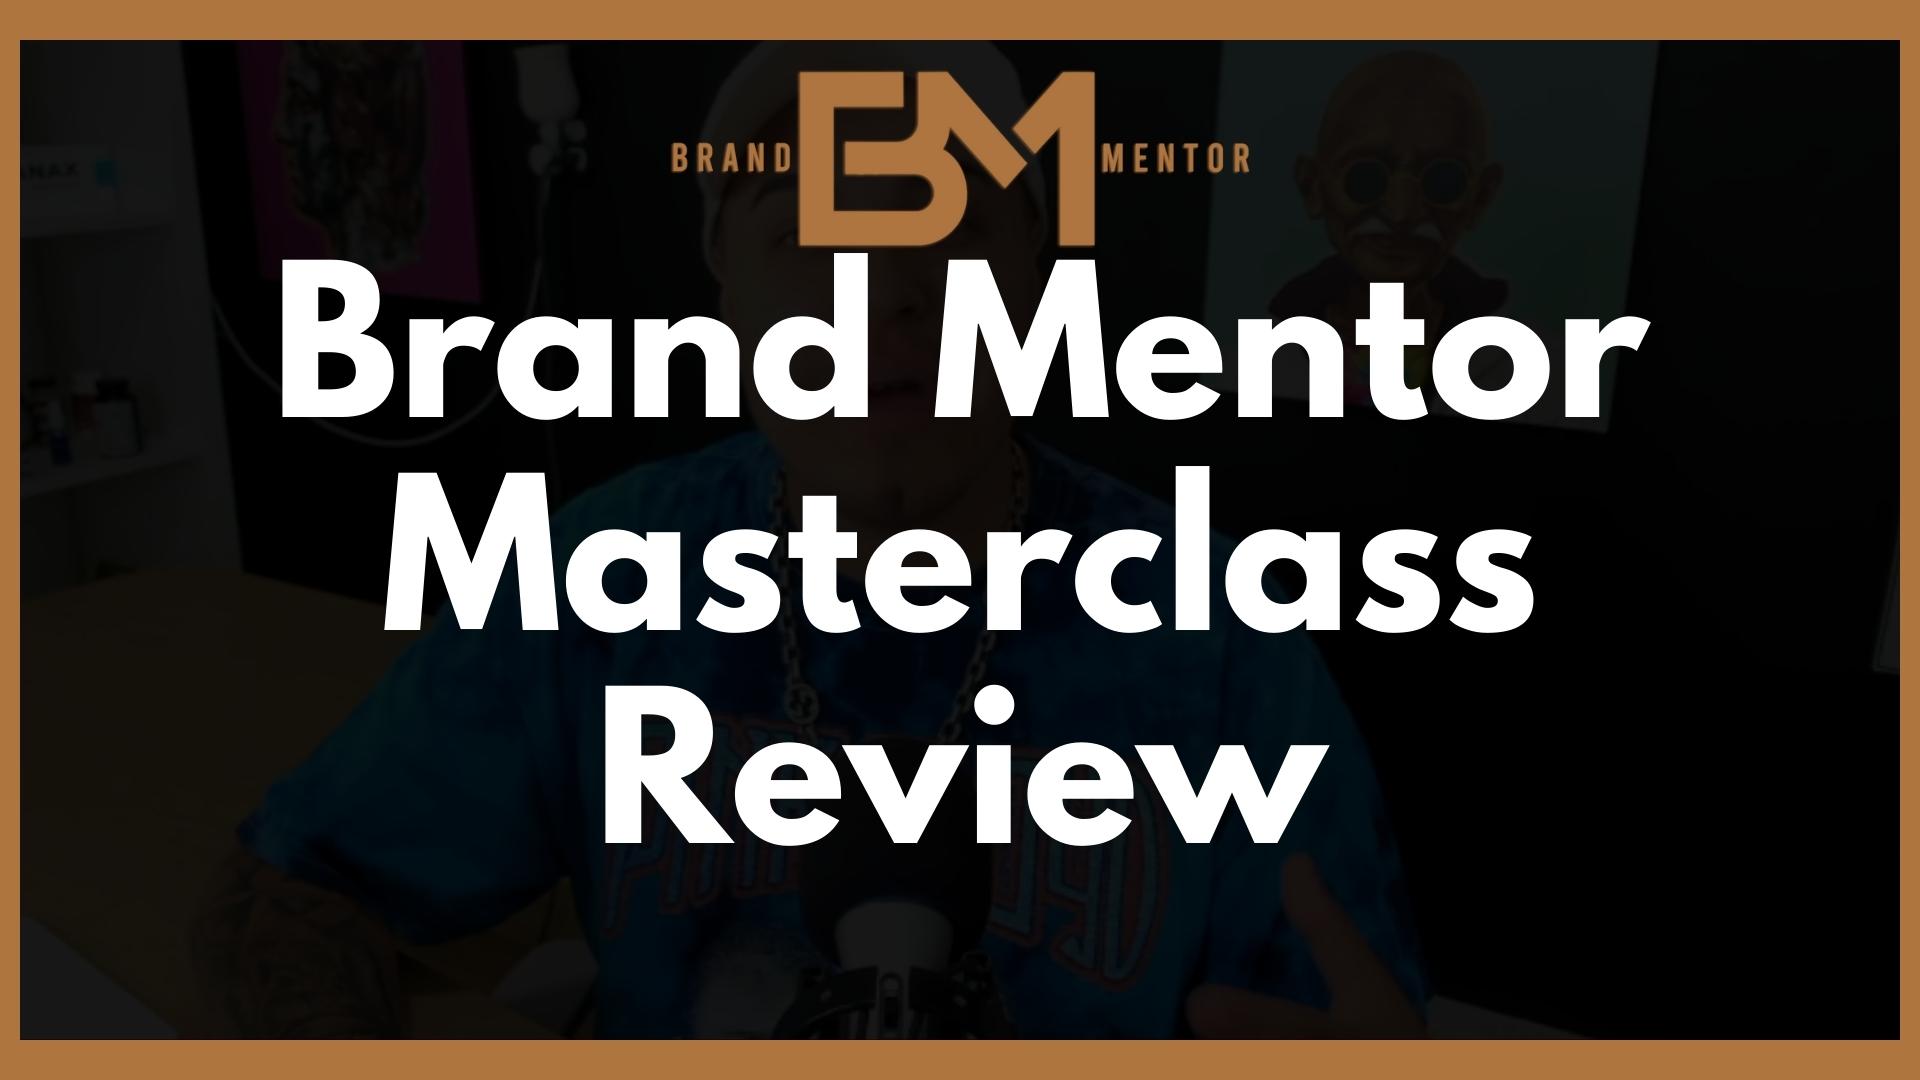 Brand Mentor Masterclass Review